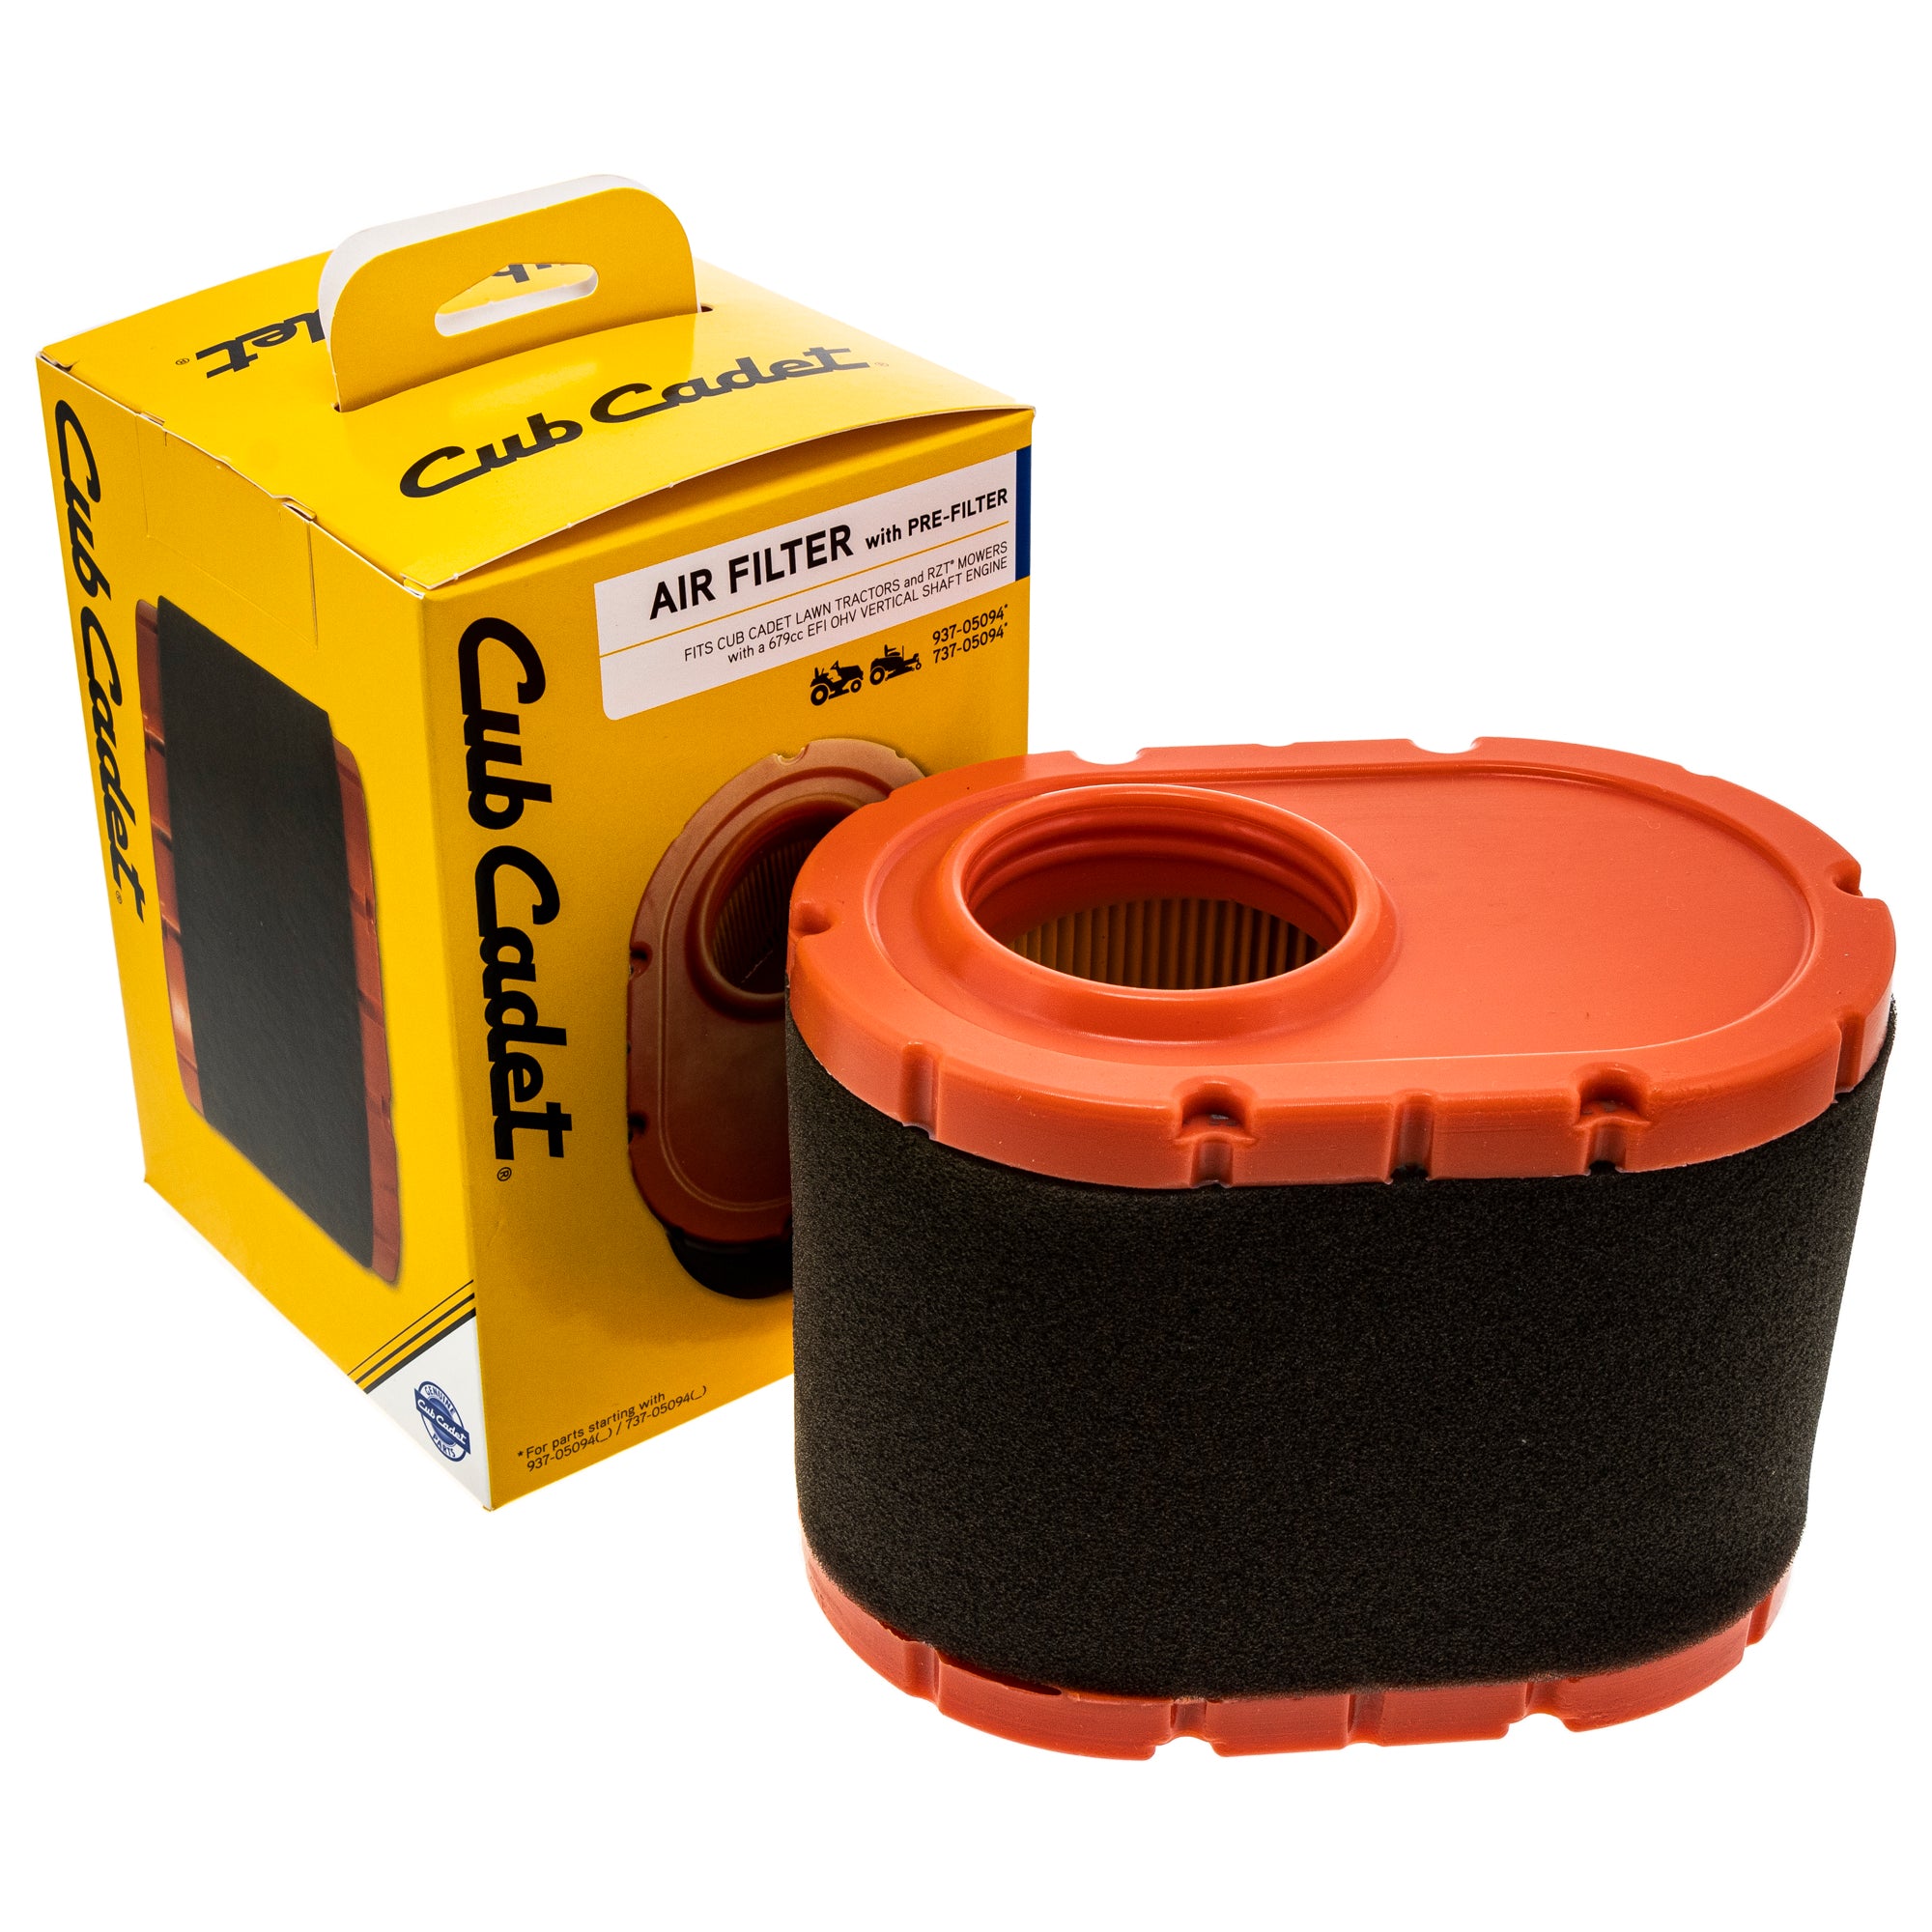 CUB CADET 937-05094 Air Filter